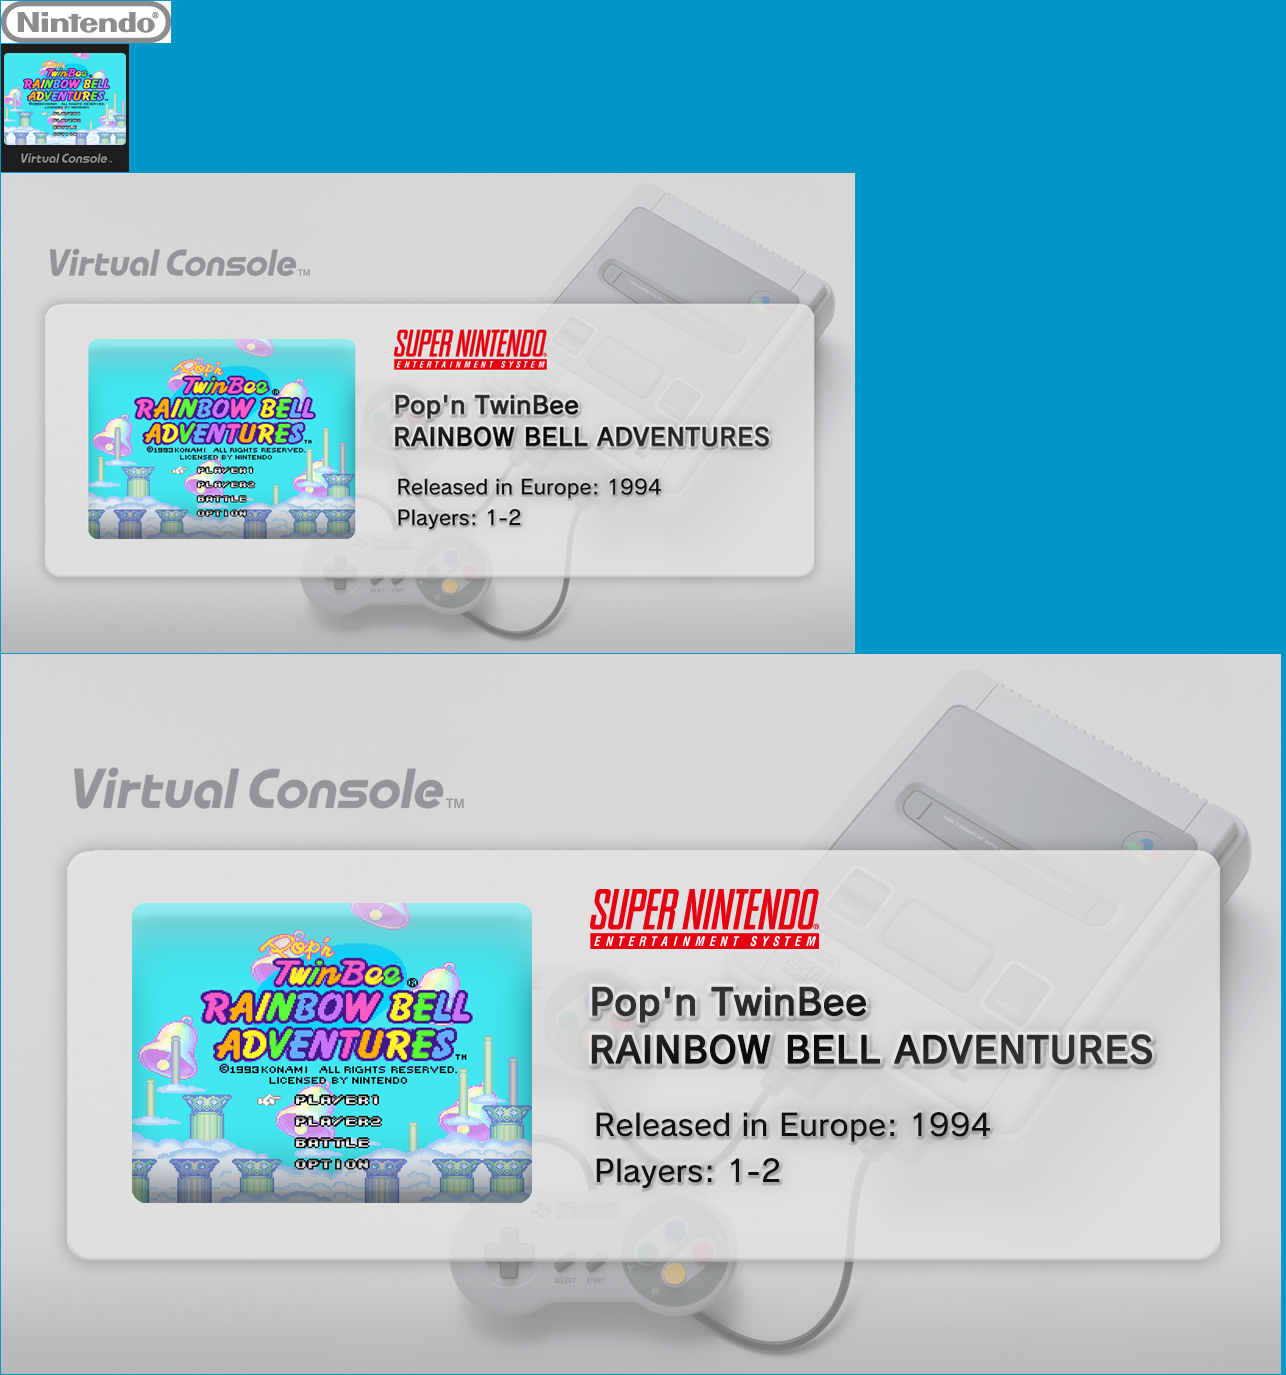 Virtual Console - Pop'n TwinBee RAINBOW BELL ADVENTURES